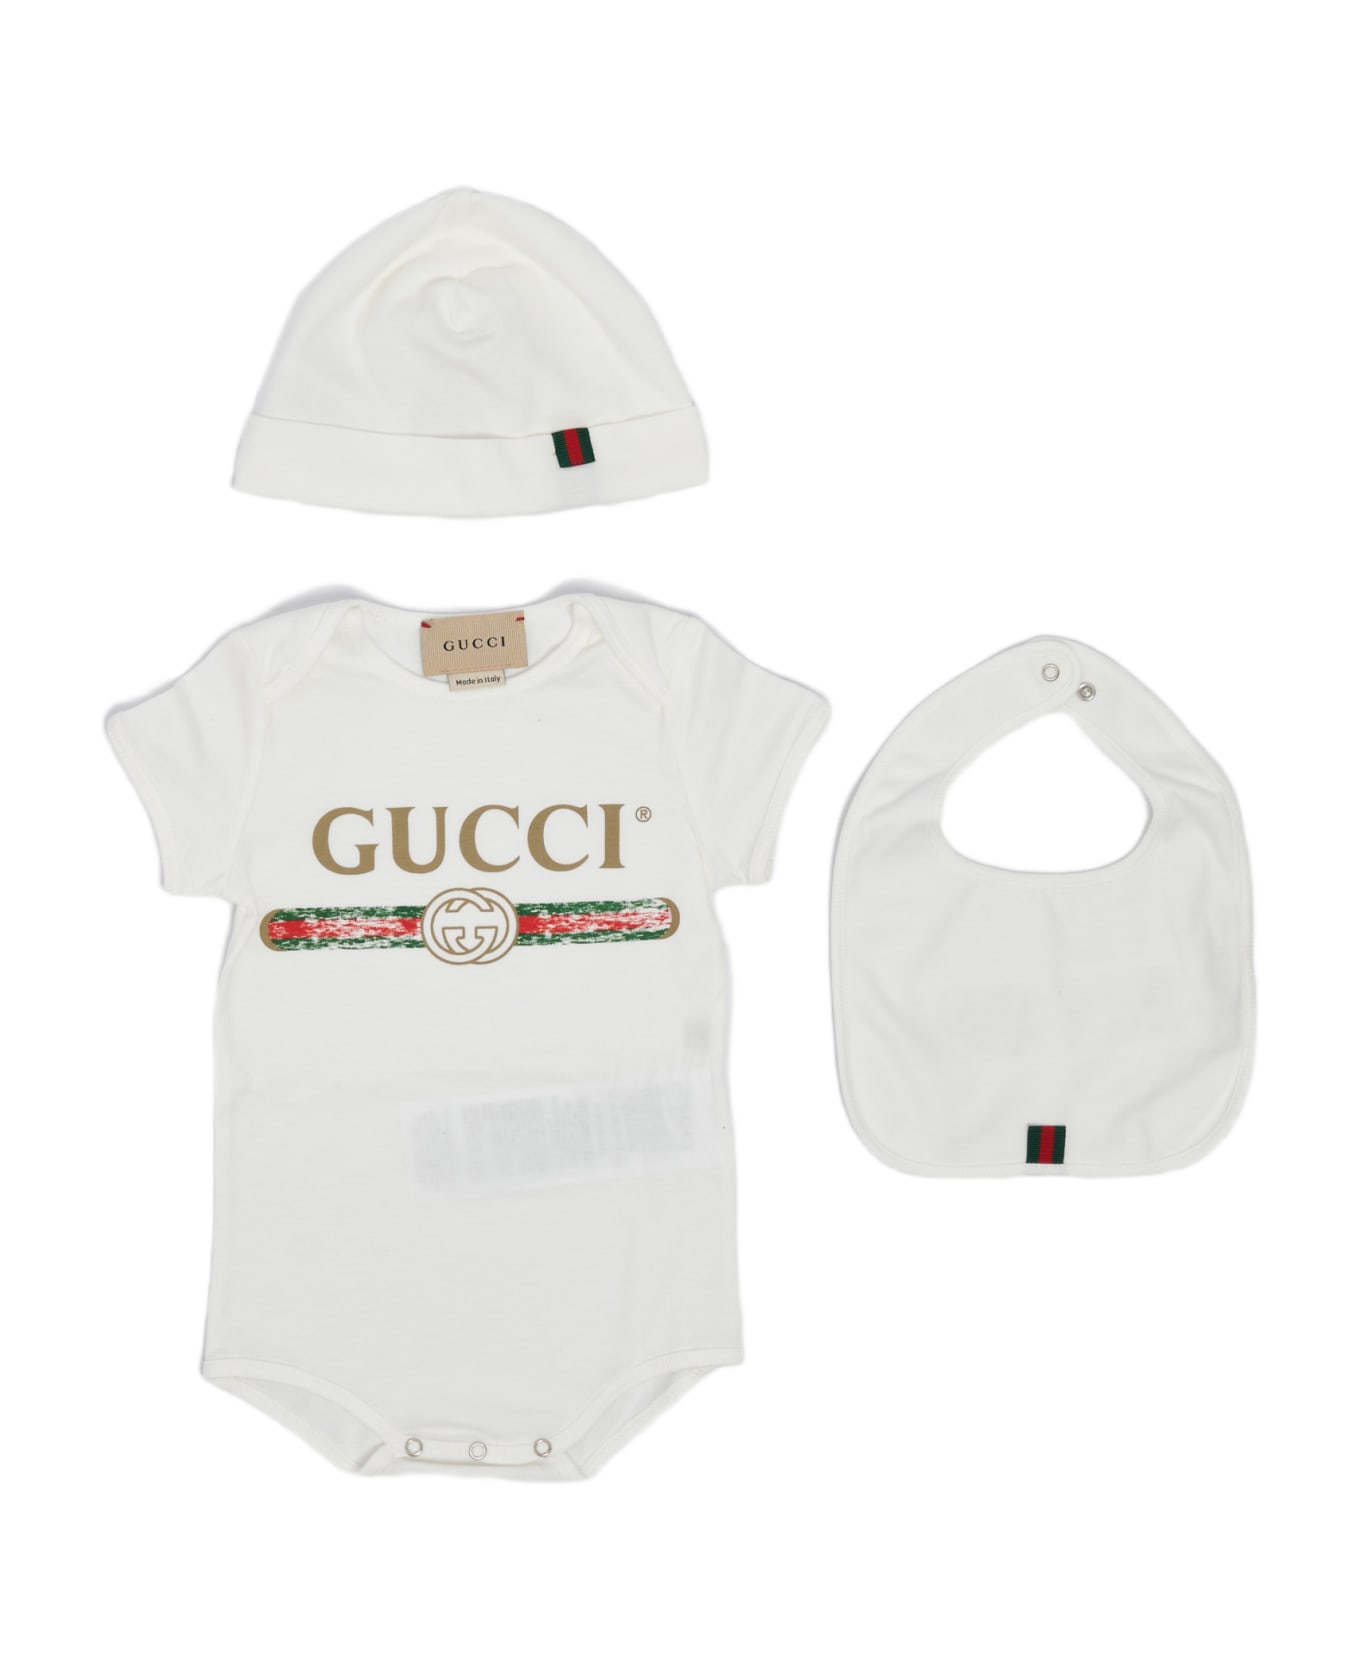 Gucci Gift Set Suit - BIANCO